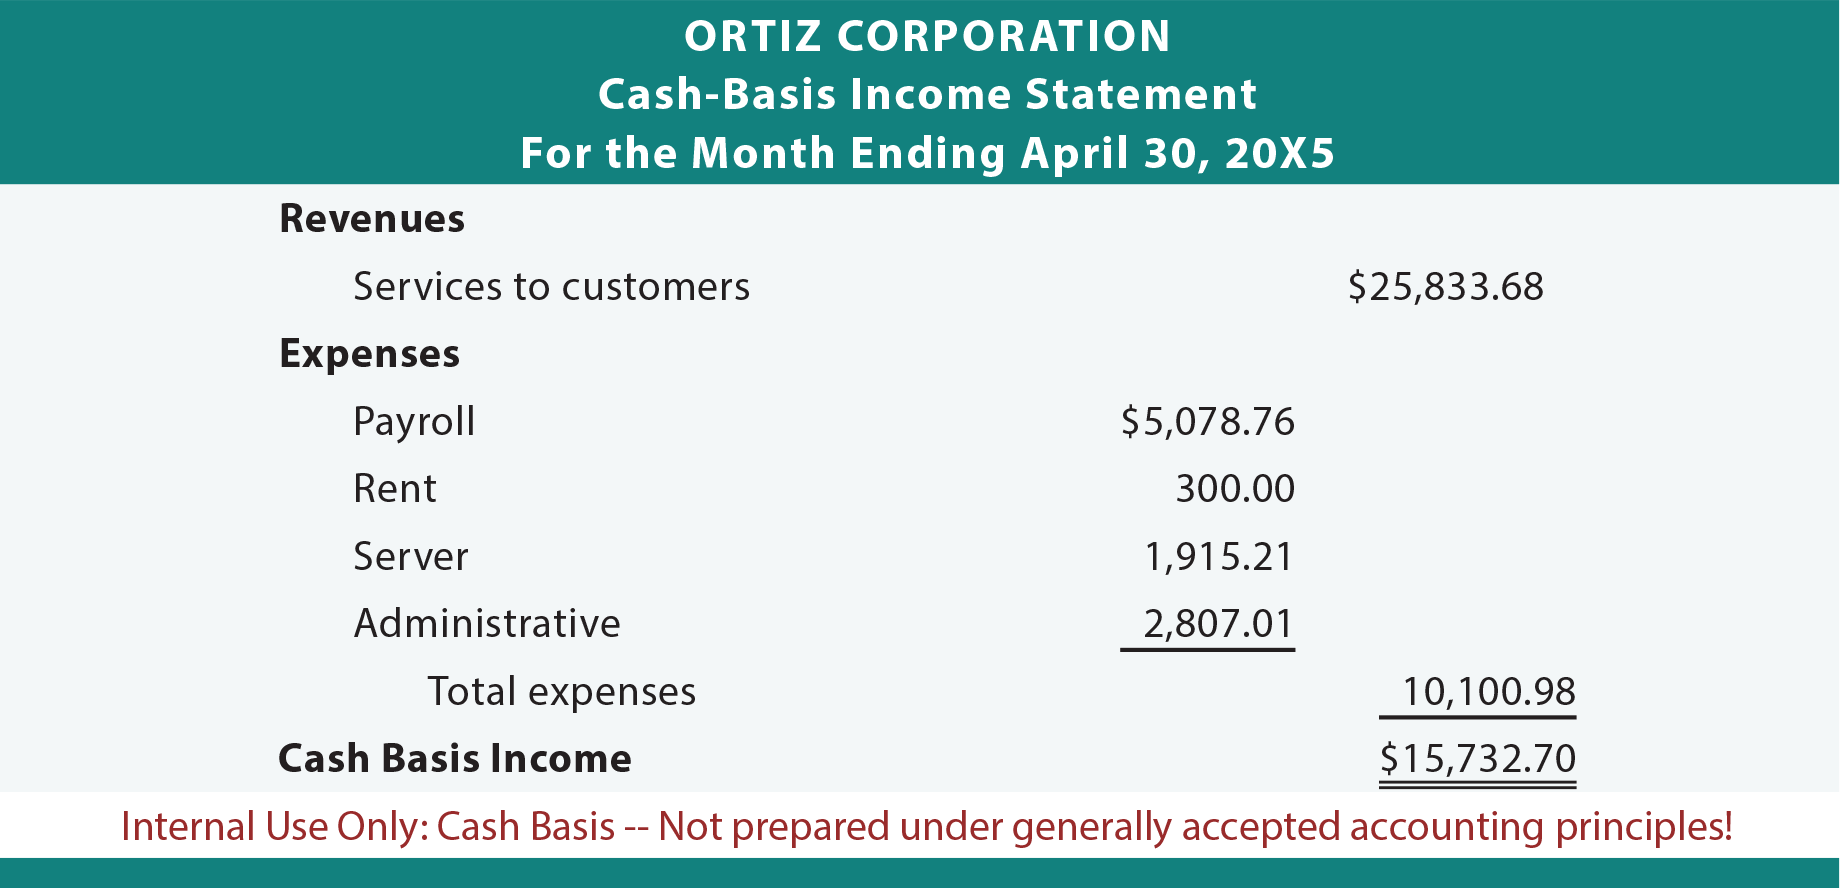 Ortiz Corporation cash basis income statement